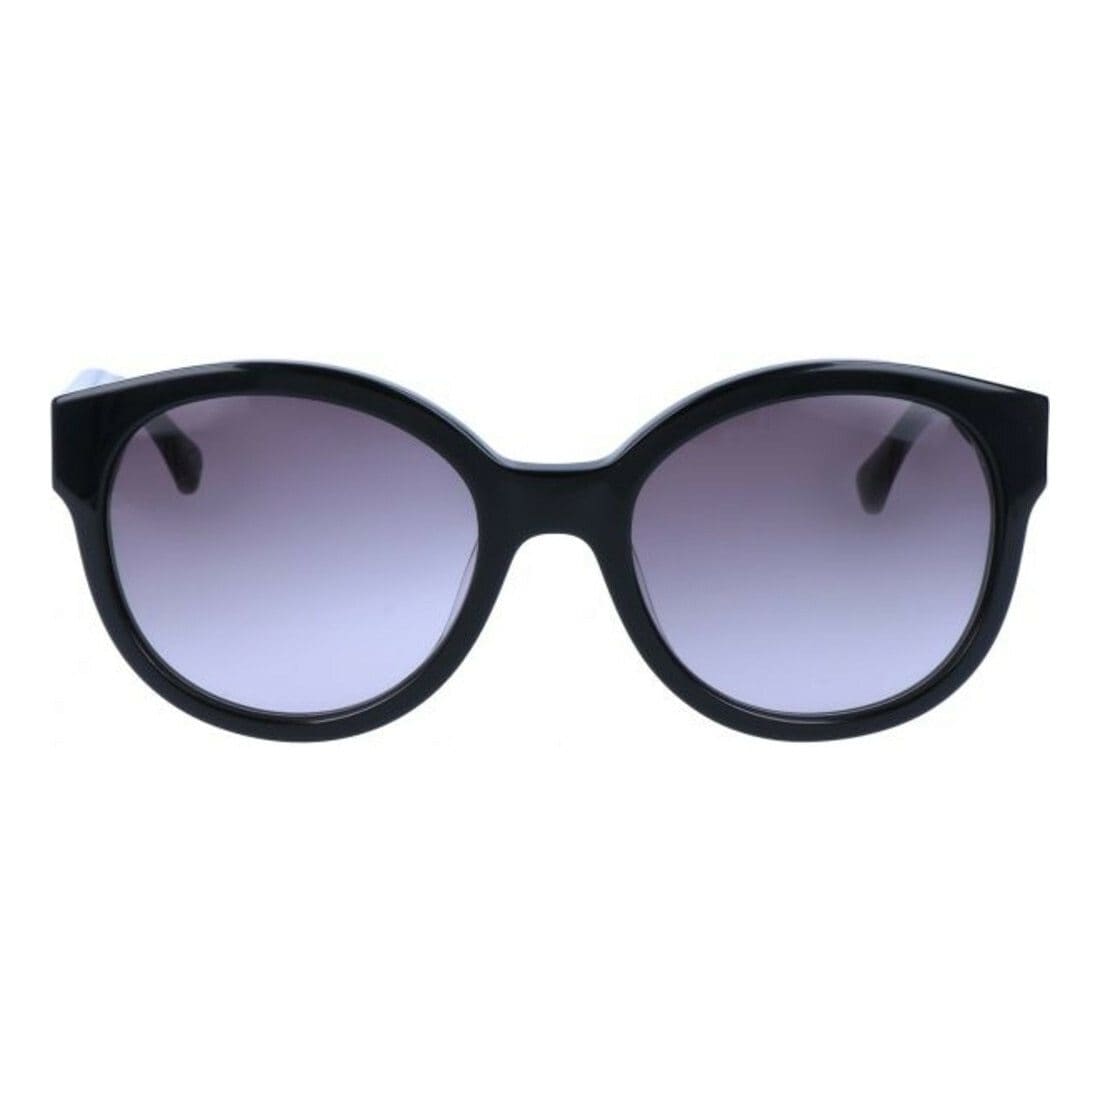 Calvin Klein CK4313S-001 CK Suns Black Round Sunglasses Frames with Grey Lenses 750779092897